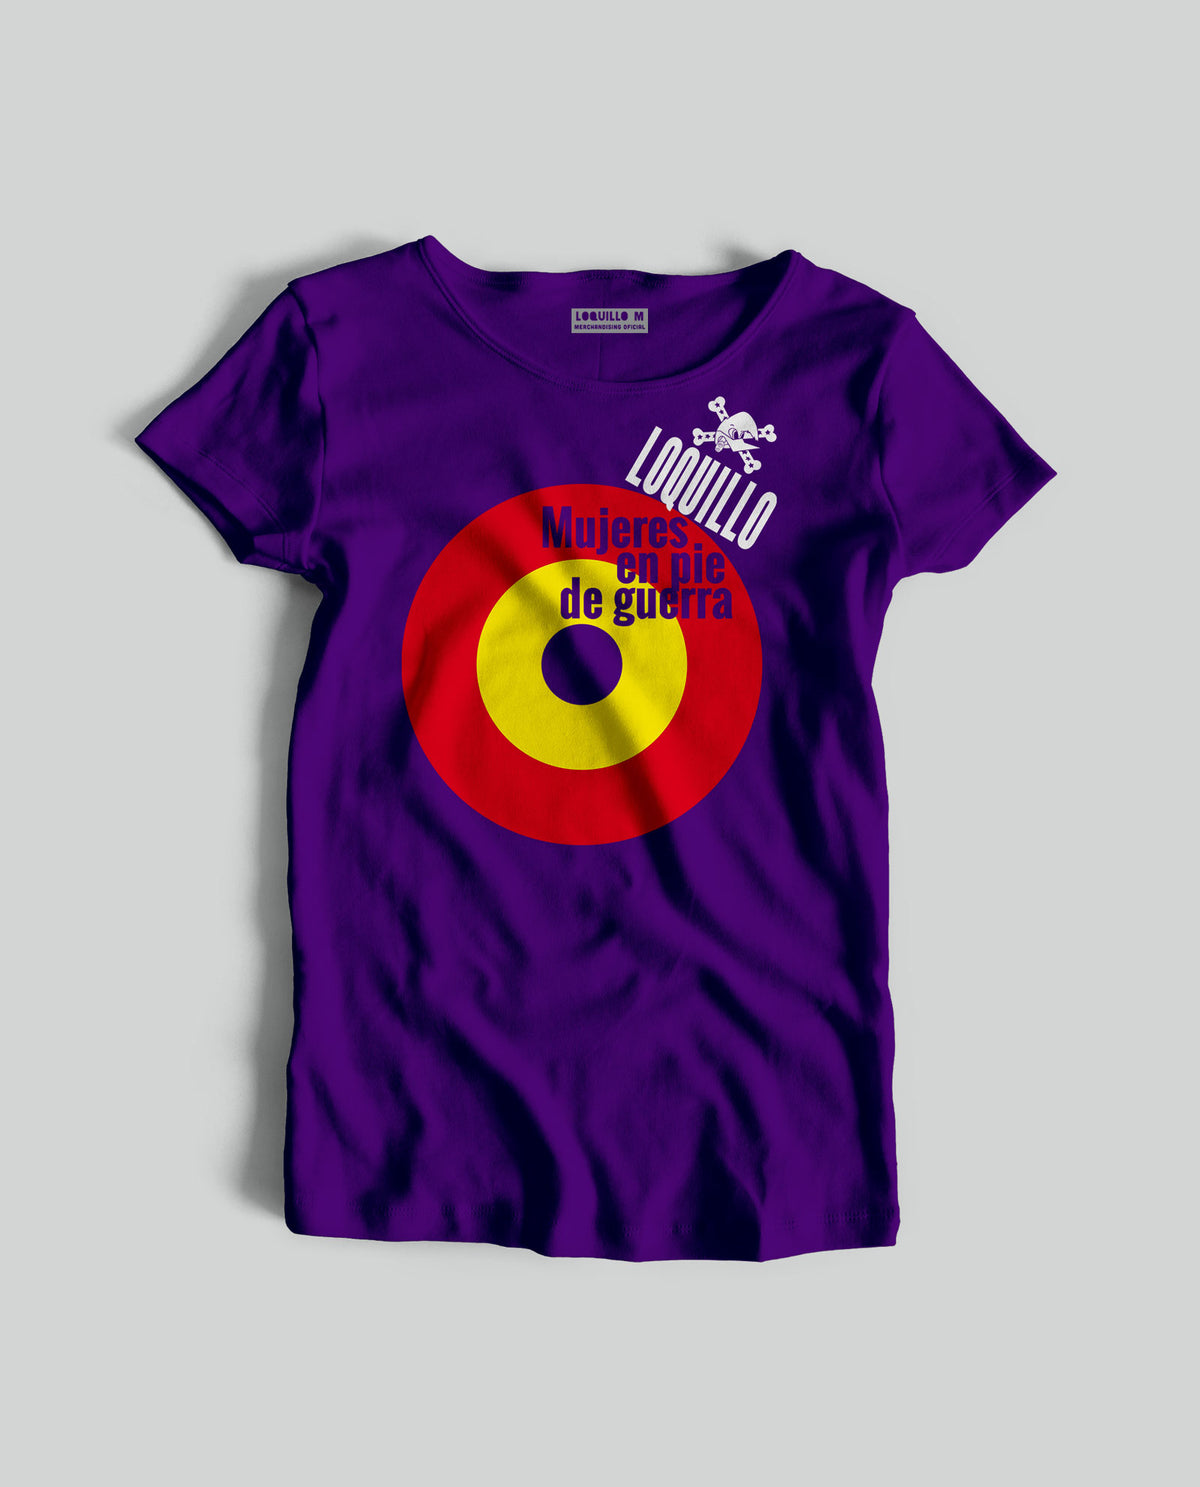 Loquillo - Camiseta "Mujeres en pie de guerra"